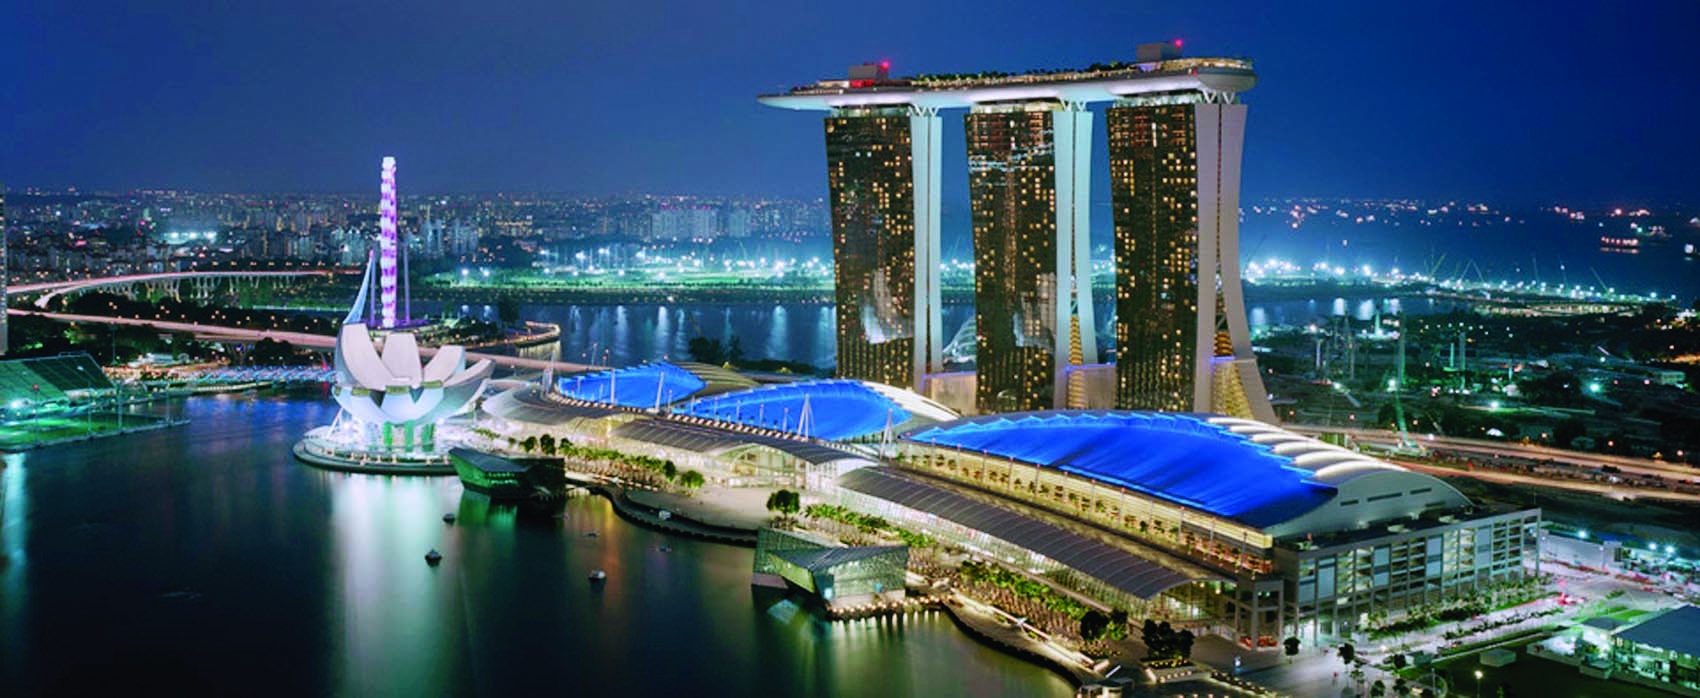 Sands Casino Singapore Marina Bay